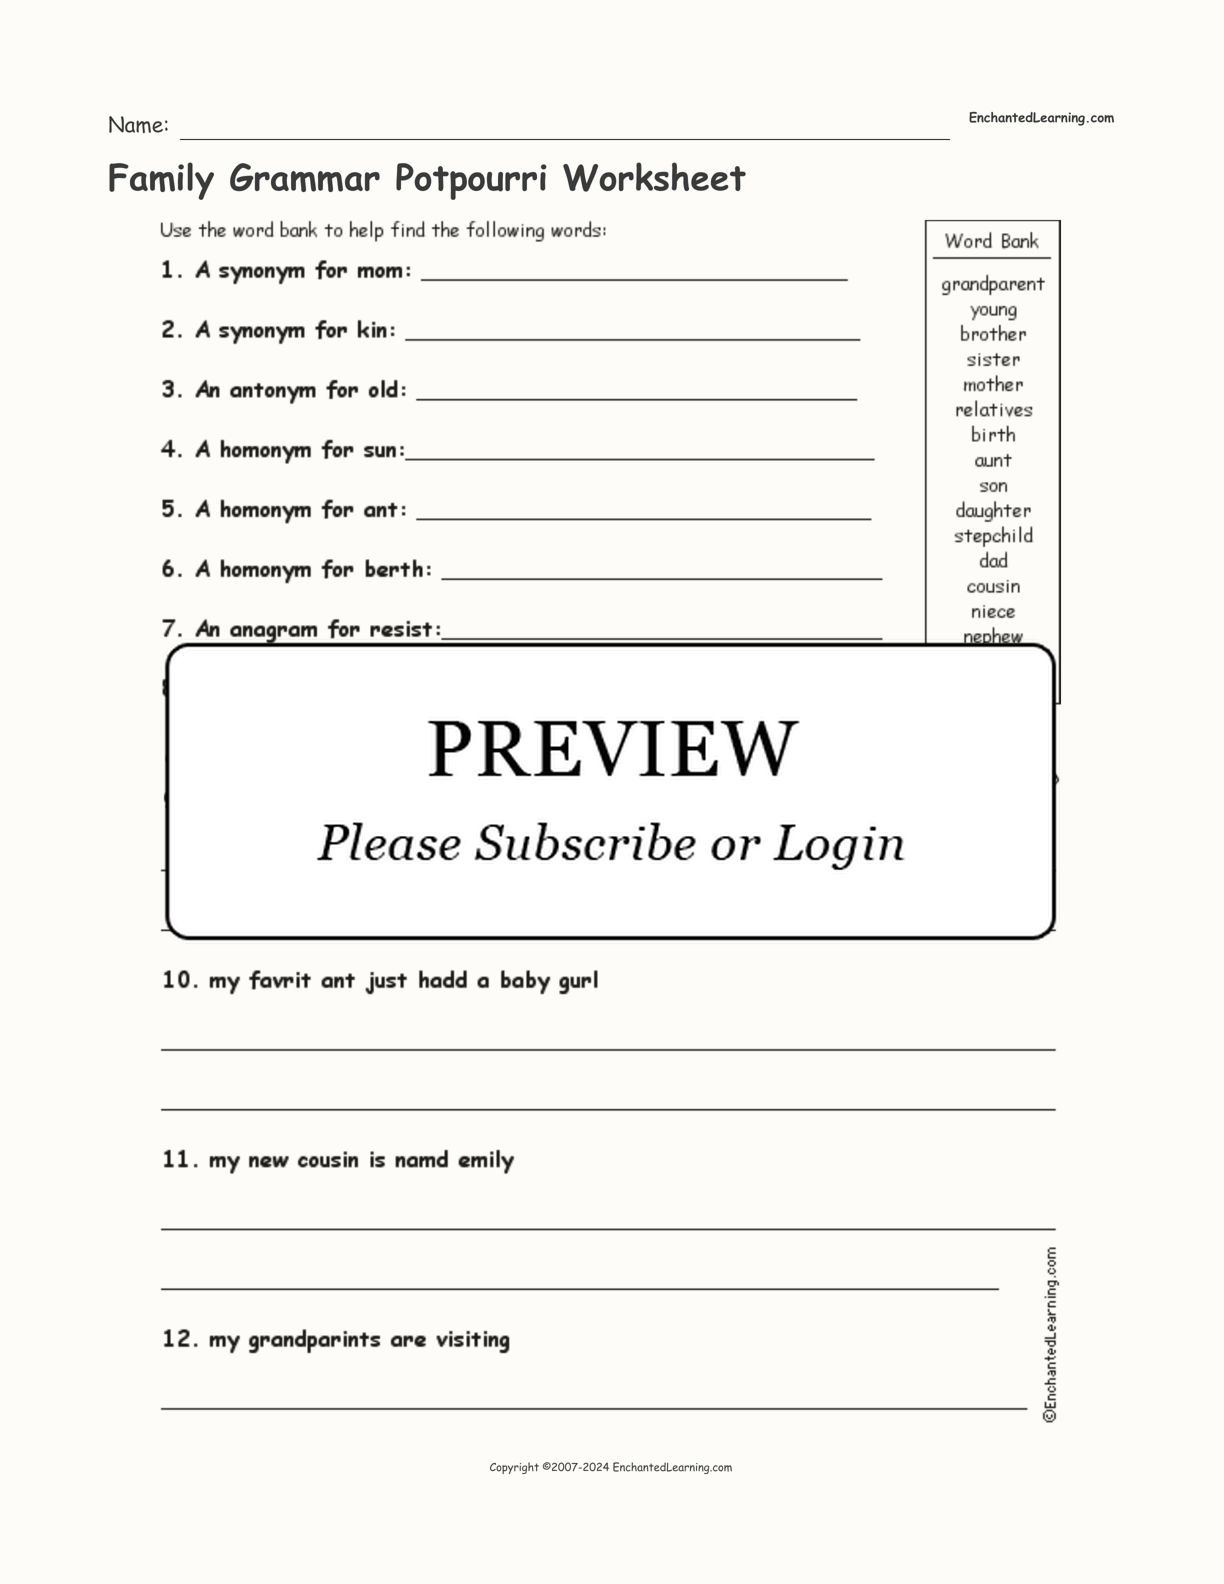 Family Grammar Potpourri Worksheet interactive worksheet page 1